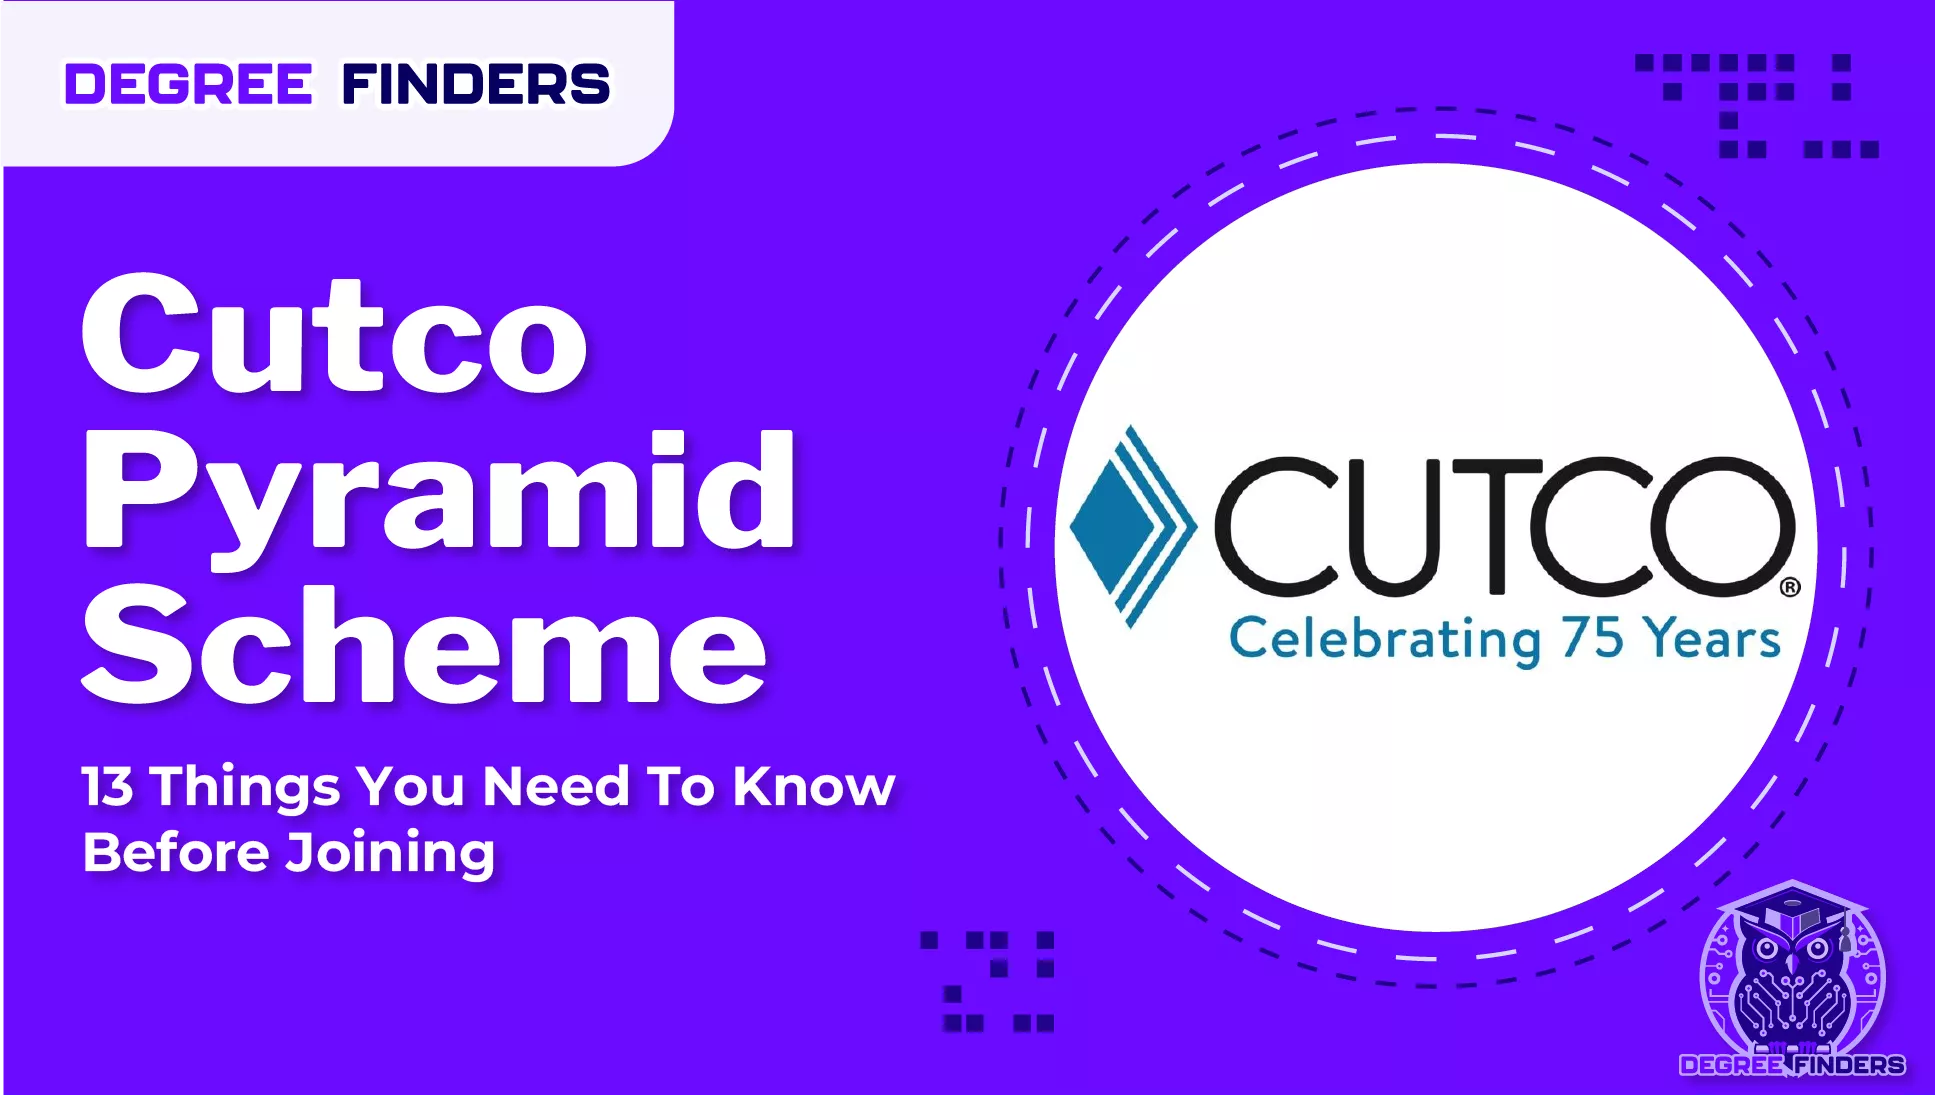 Cutco Pyramid Scheme